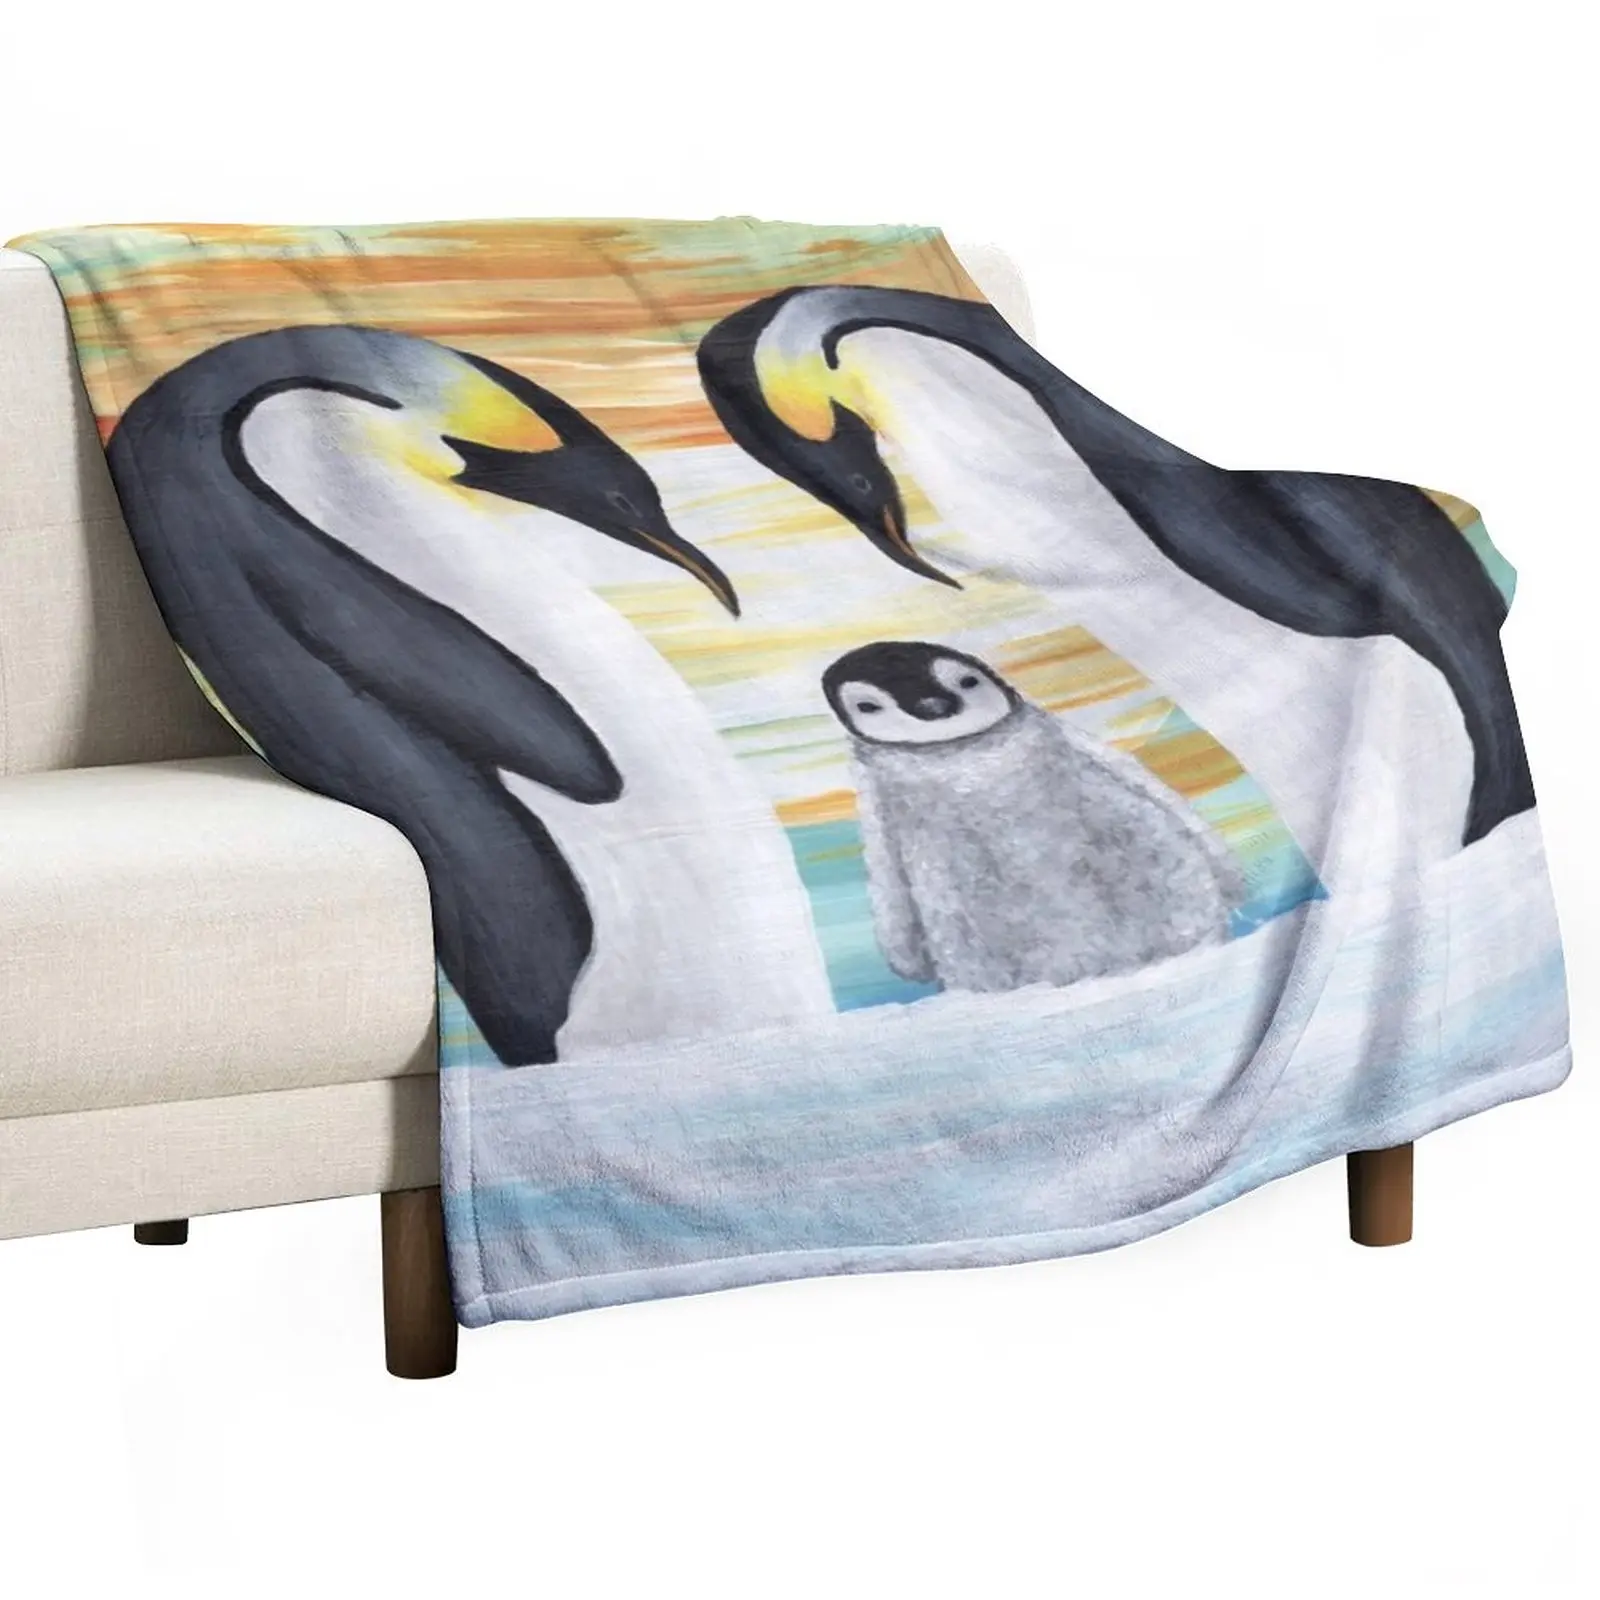 

Penguin Family Baby Painting Throw Blanket Fluffy Soft Blankets Retro Blankets Moving Blanket Warm Blanket